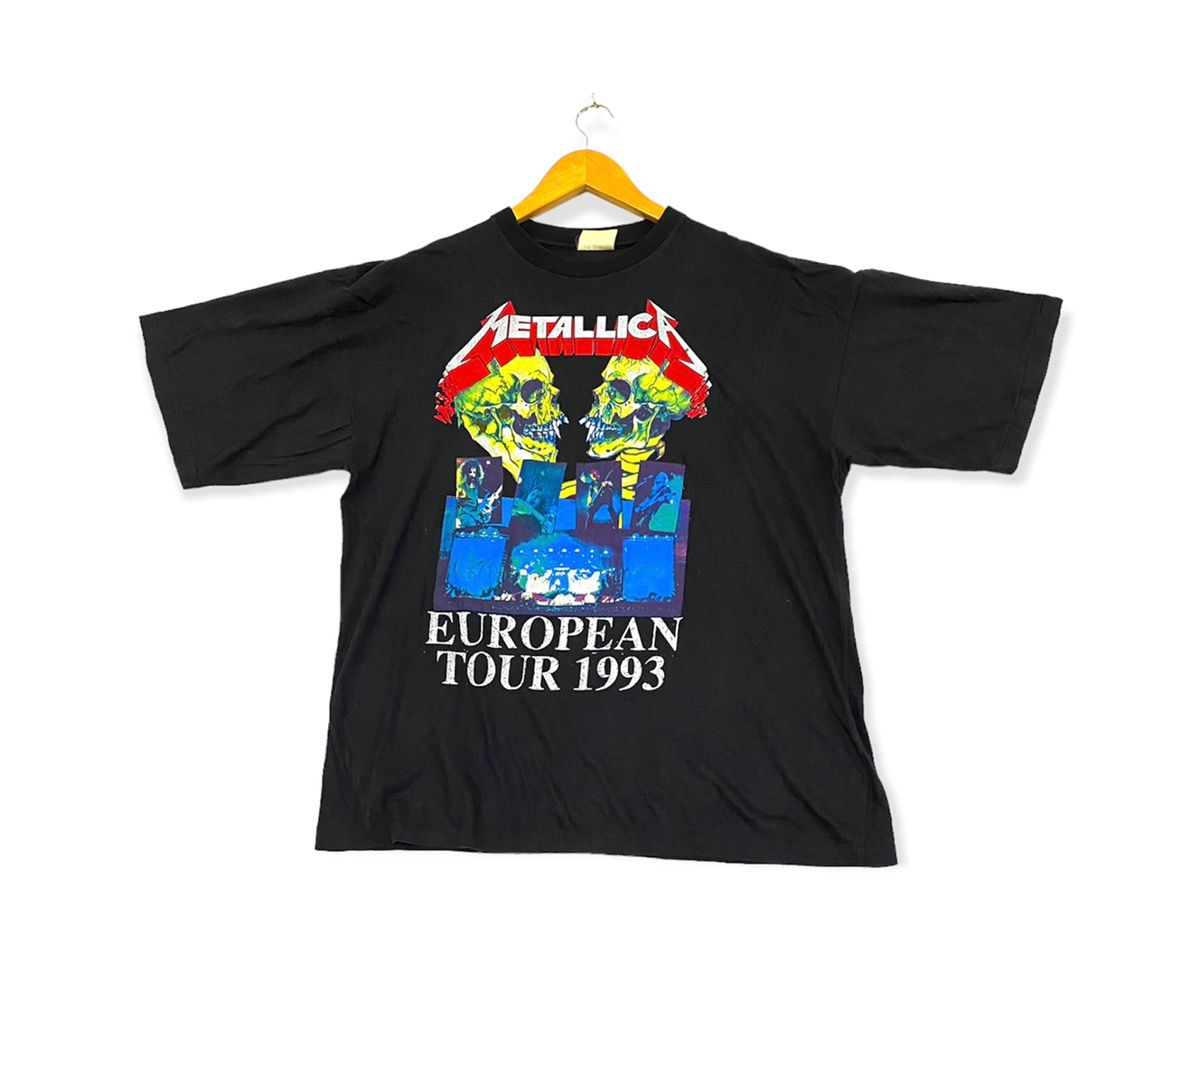 Vintage vintage 1993 METALLICA european tour pushead t-shirts Size US XL / EU 56 / 4 - 1 Preview